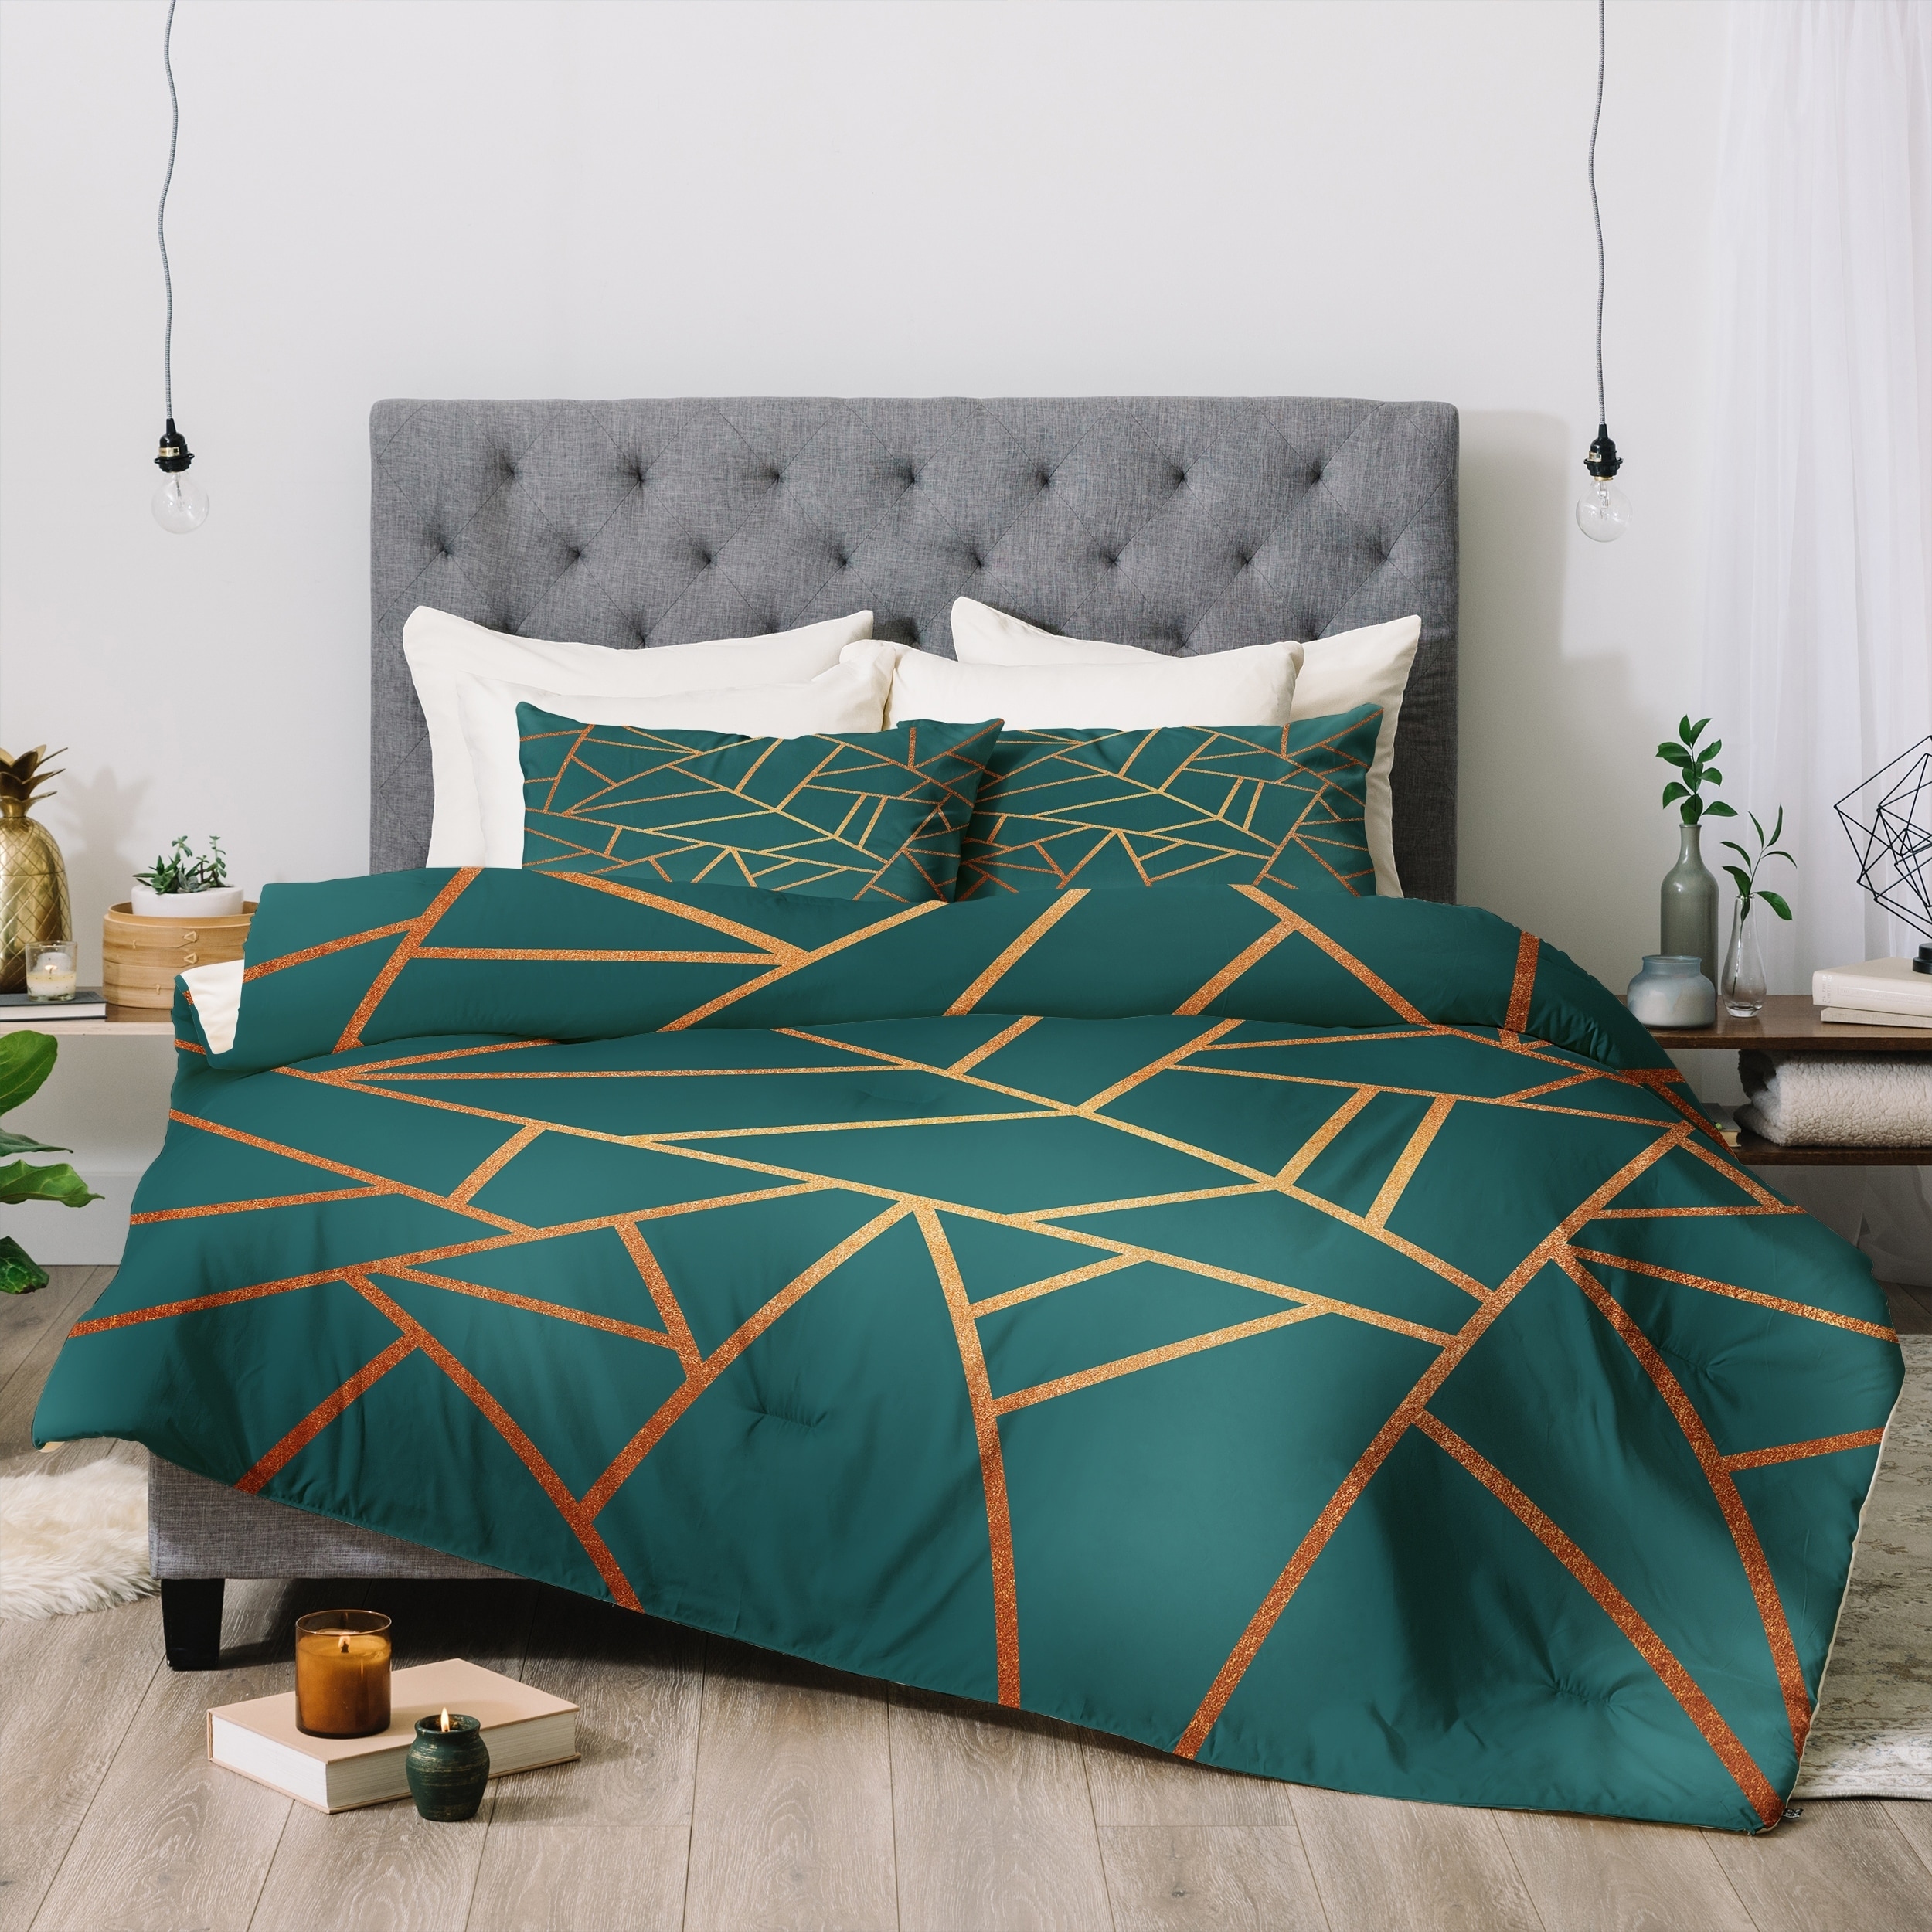 Deny Designs Teal Geometric 3 Piece Comforter Set